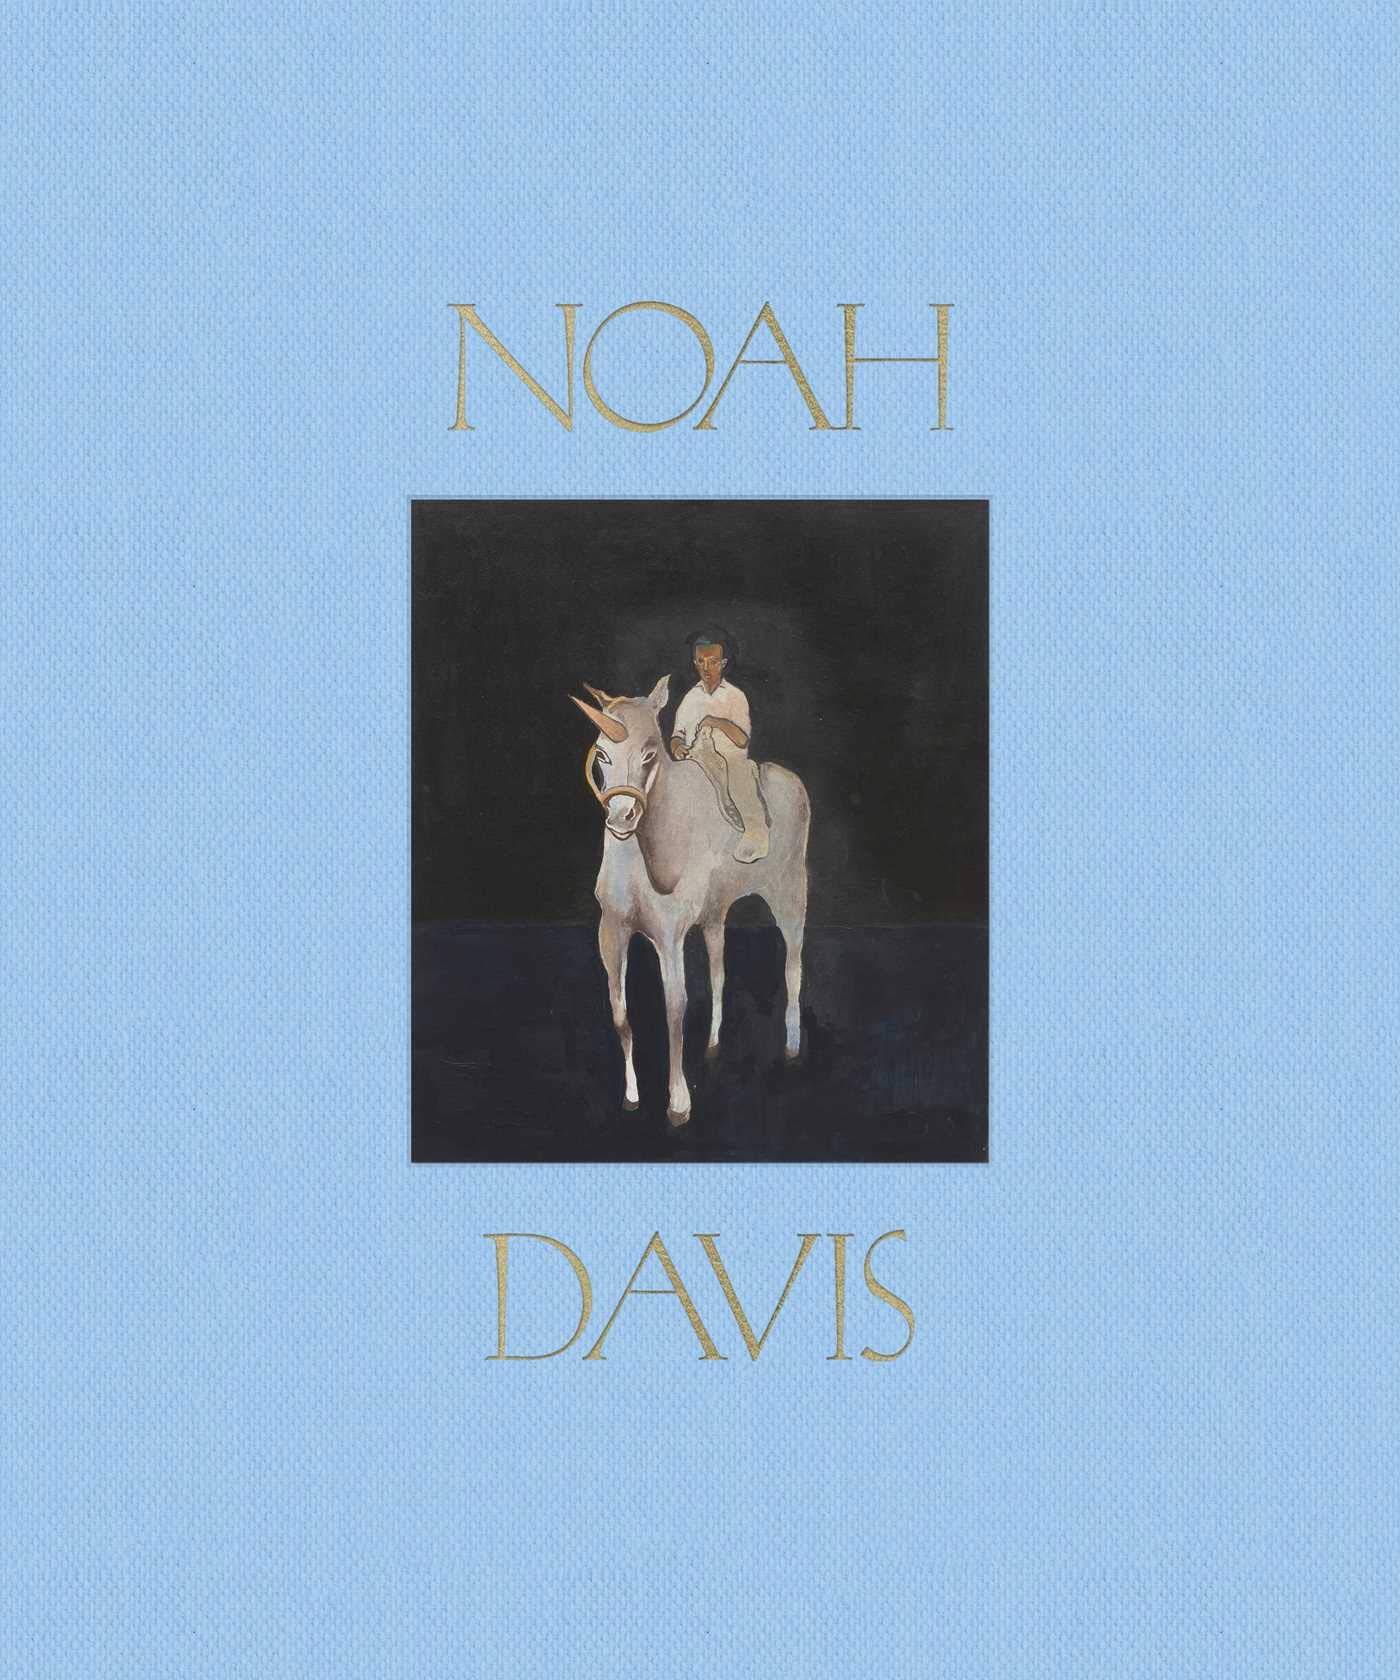 The cover of Noah Davis